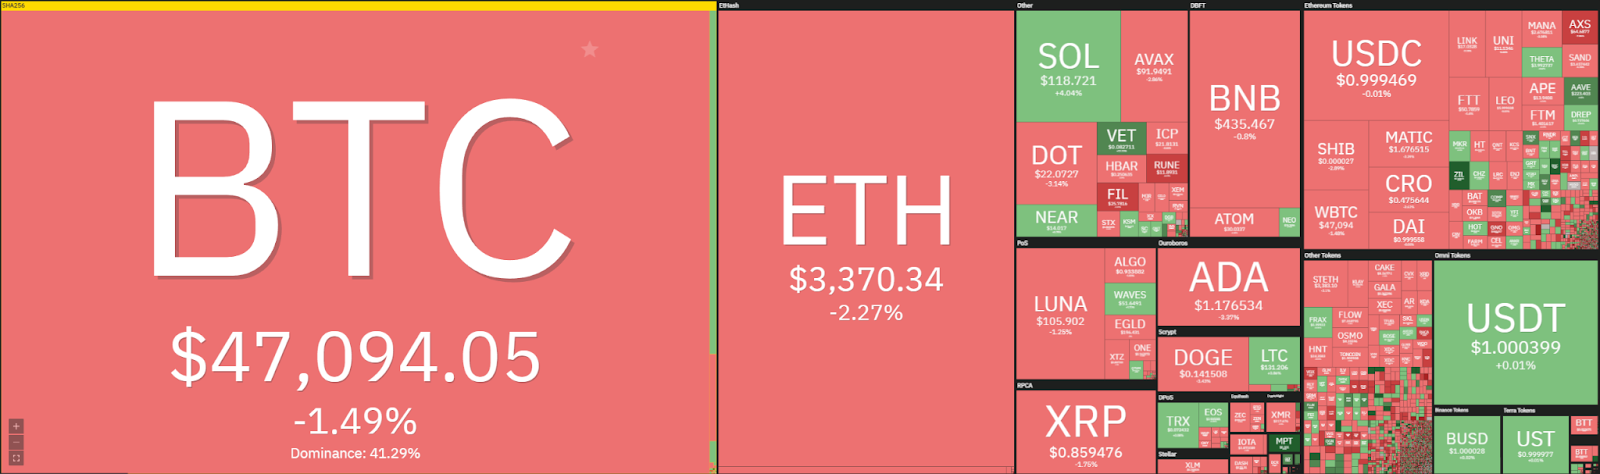 Ethereum price analysis: ETH consolidates around $3,400, ready to retrace? 1